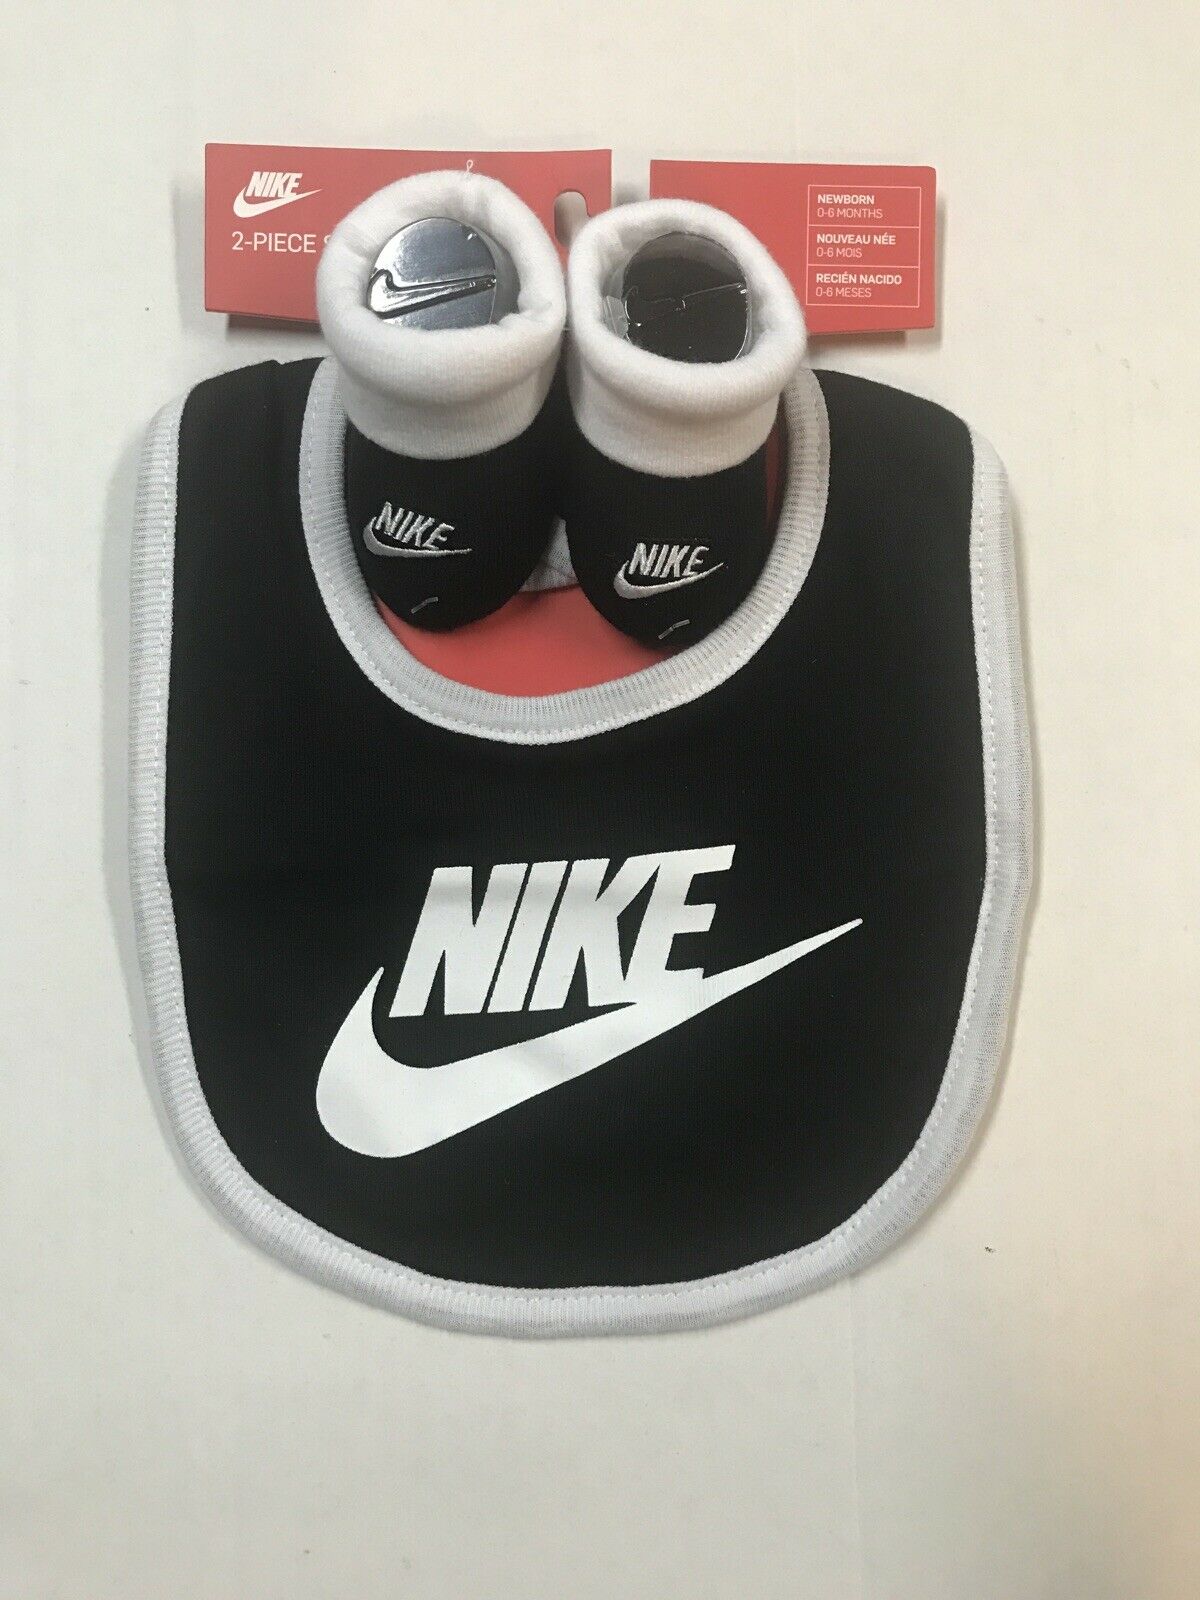 Nike Booties Socks Crib Shoes & Bib Gift 2 Pc Set Newborn Baby Boy Sz 0-6 Mo